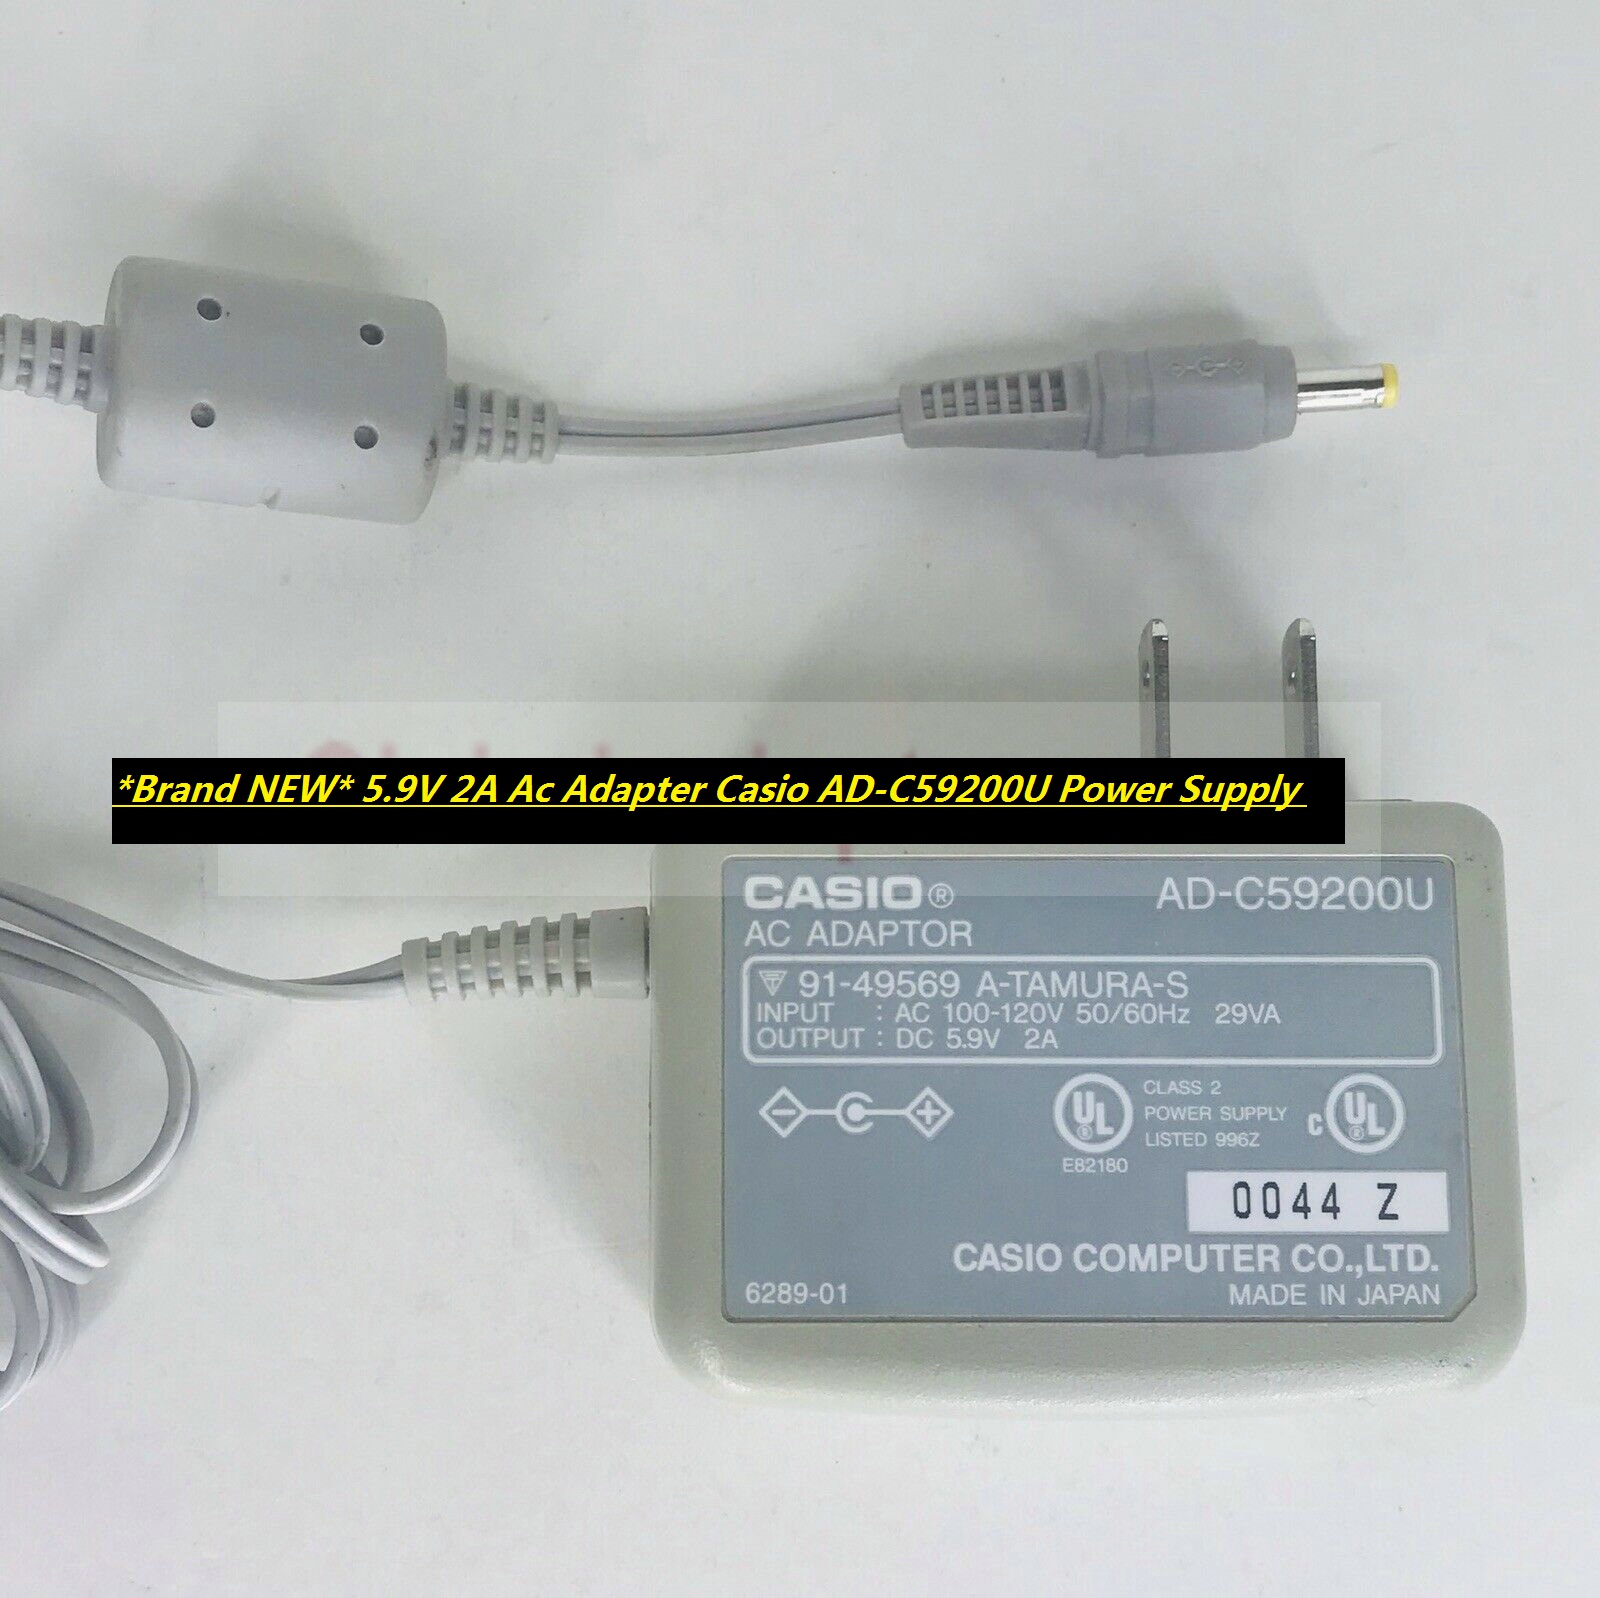 *Brand NEW* 5.9V 2A Ac Adapter Casio AD-C59200U Power Supply